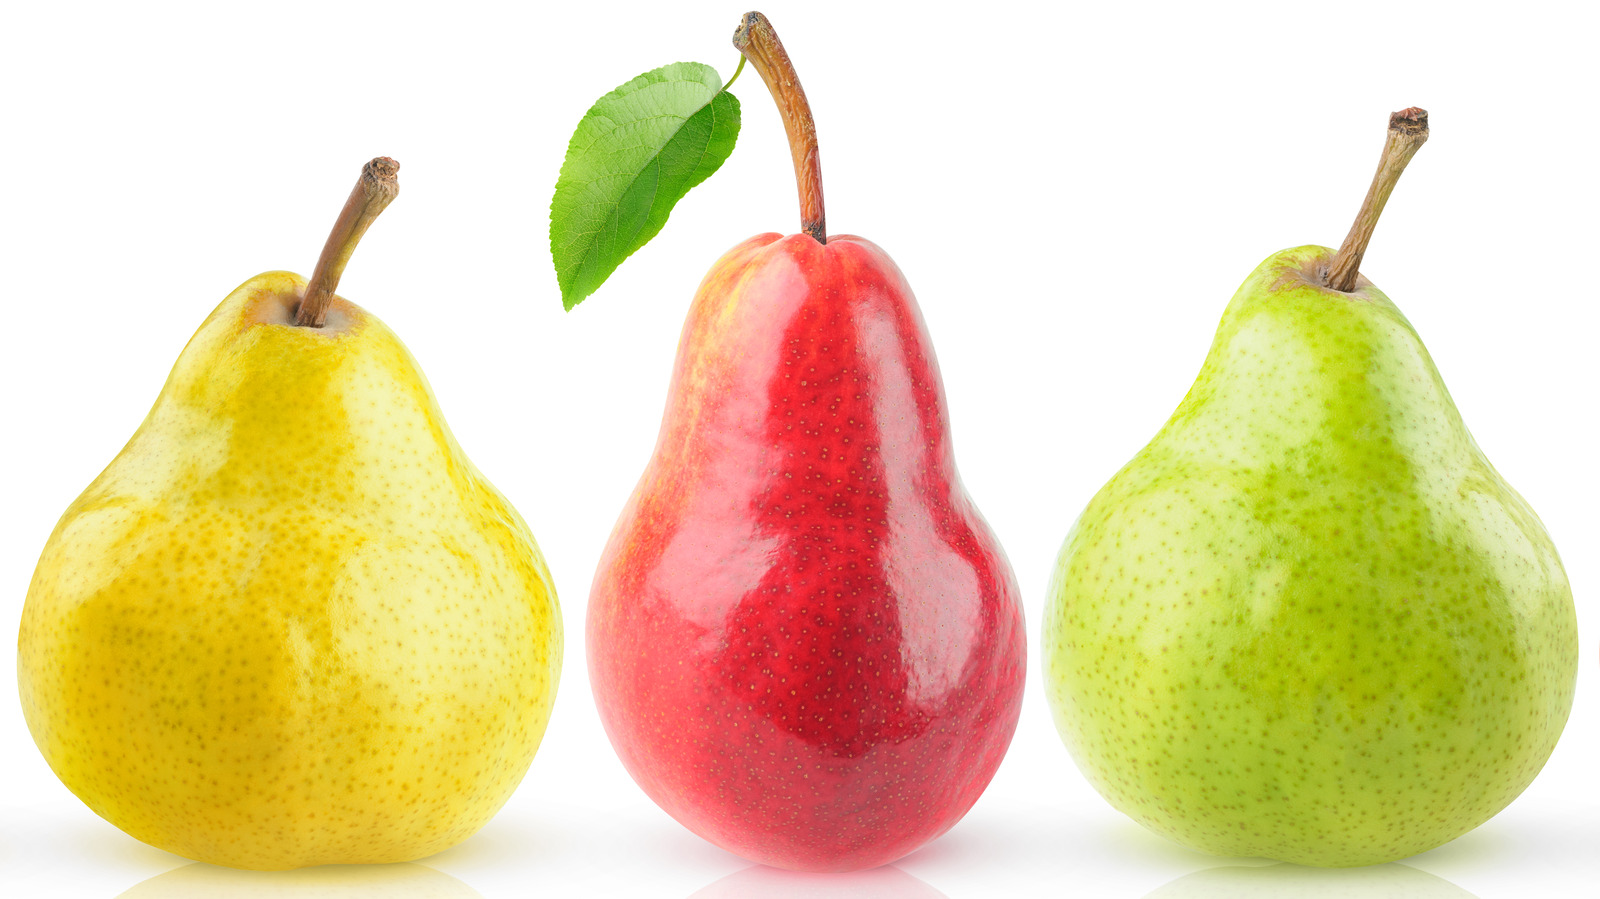 Bosc Pears, Large